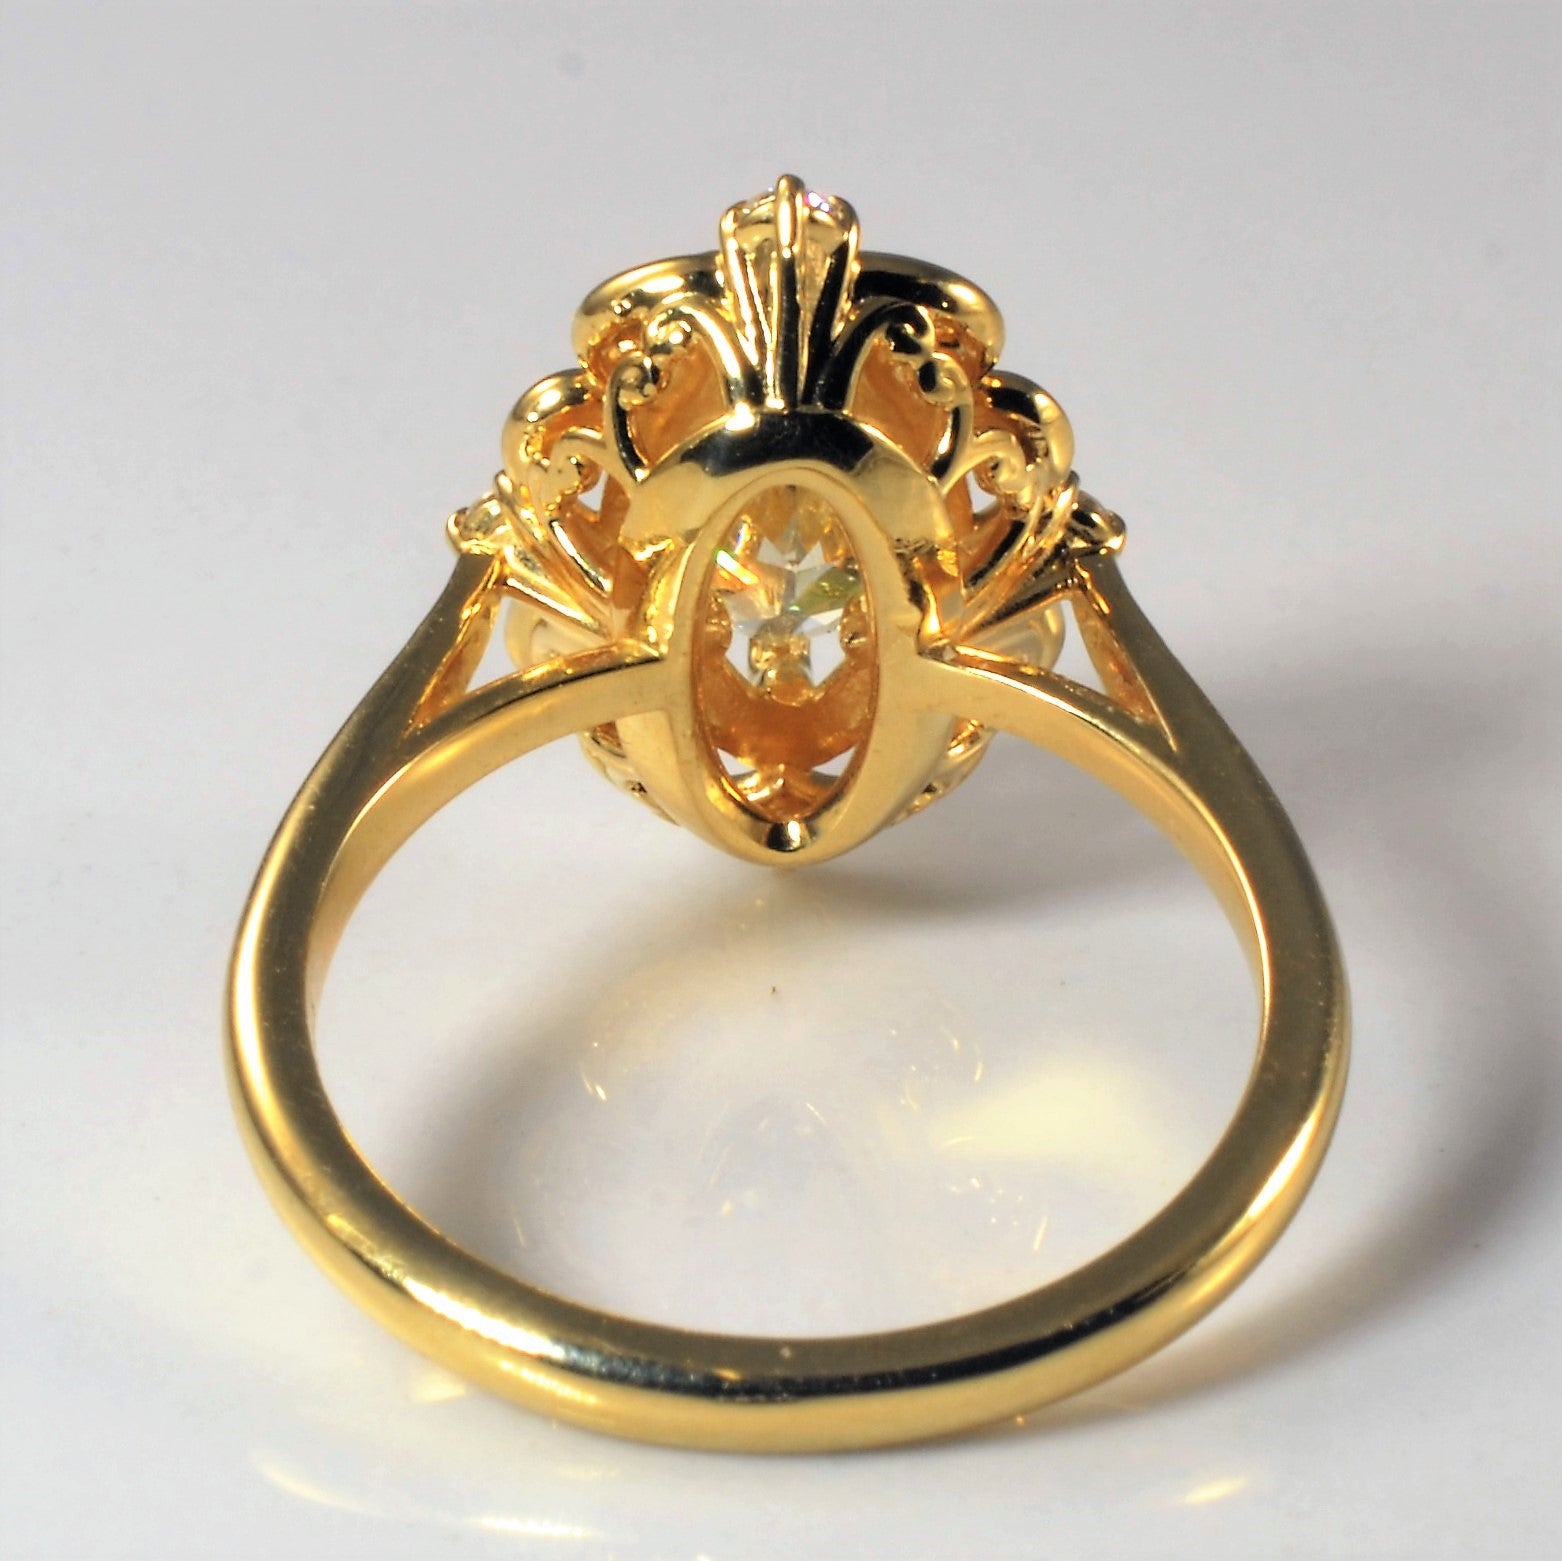 Bespoke' Ornate Filigree Marquise Diamond Ring | 1.71ctw | SZ 7 |